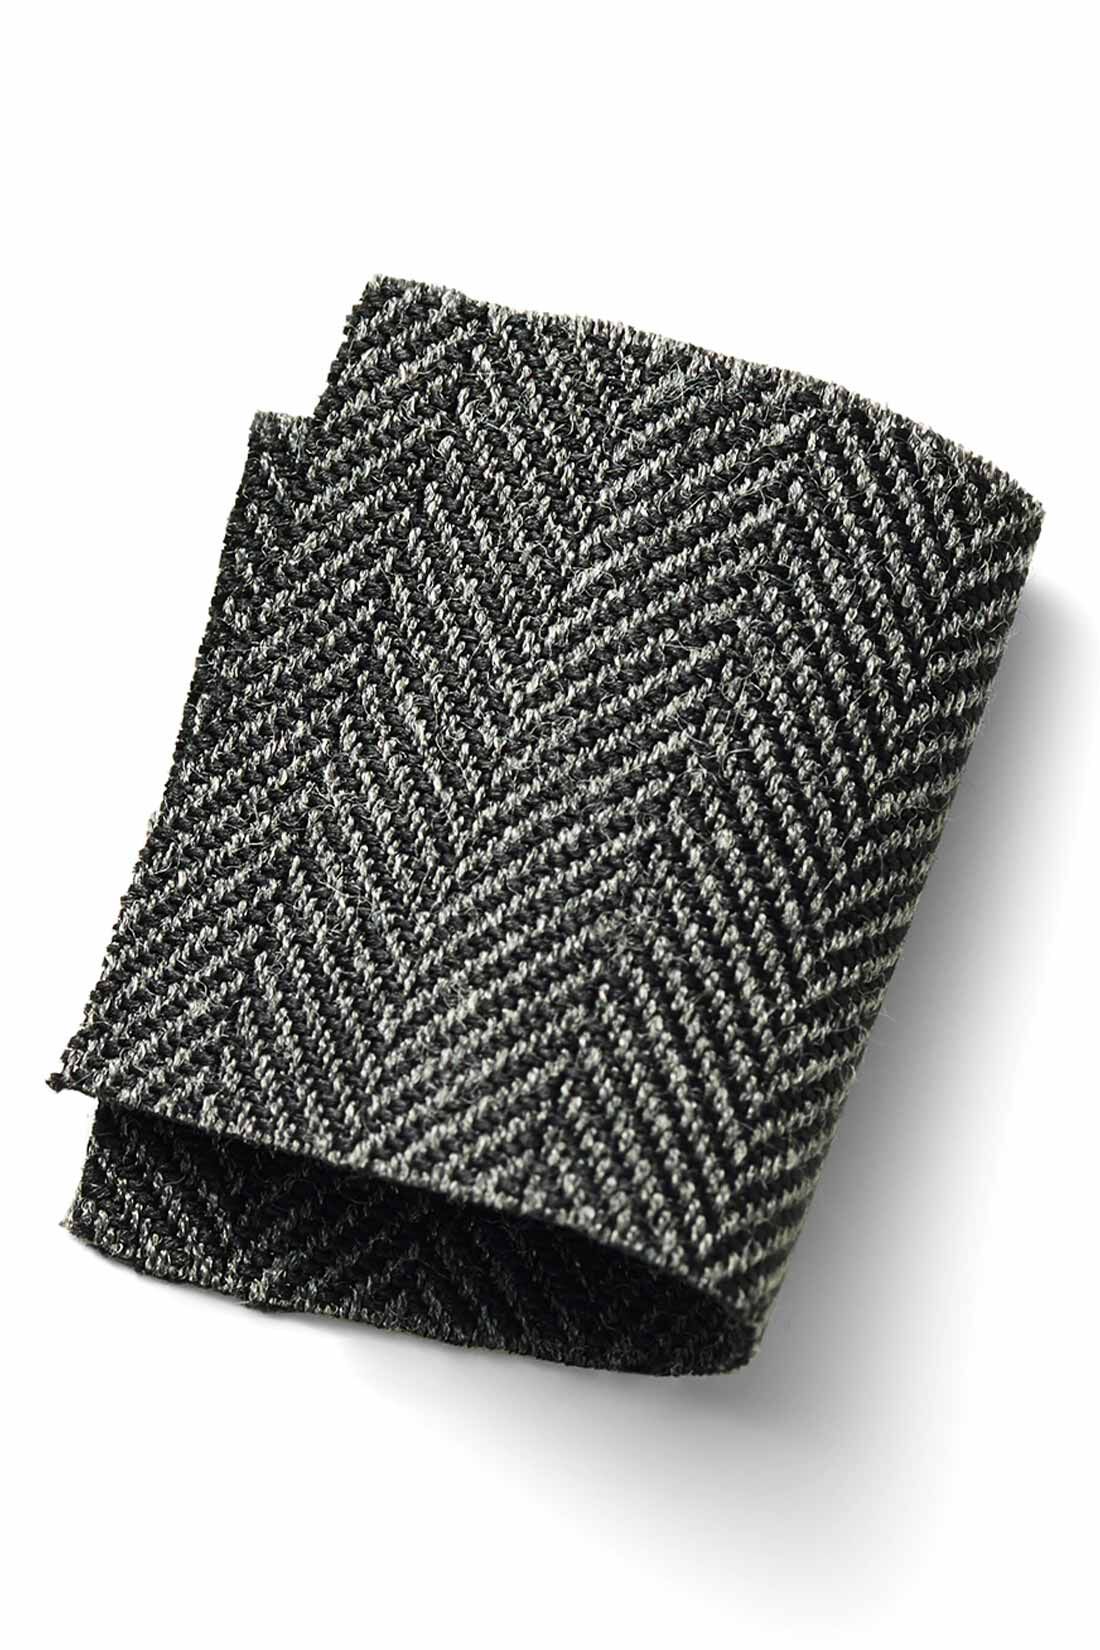 MEDE19F|MEDE19F　サスペンダー付きギャザースカート〈グレー〉|秋冬通して着られる、適度に肉厚なヘリンボーン織り素材。 あえてマニッシュな素材を選びました。